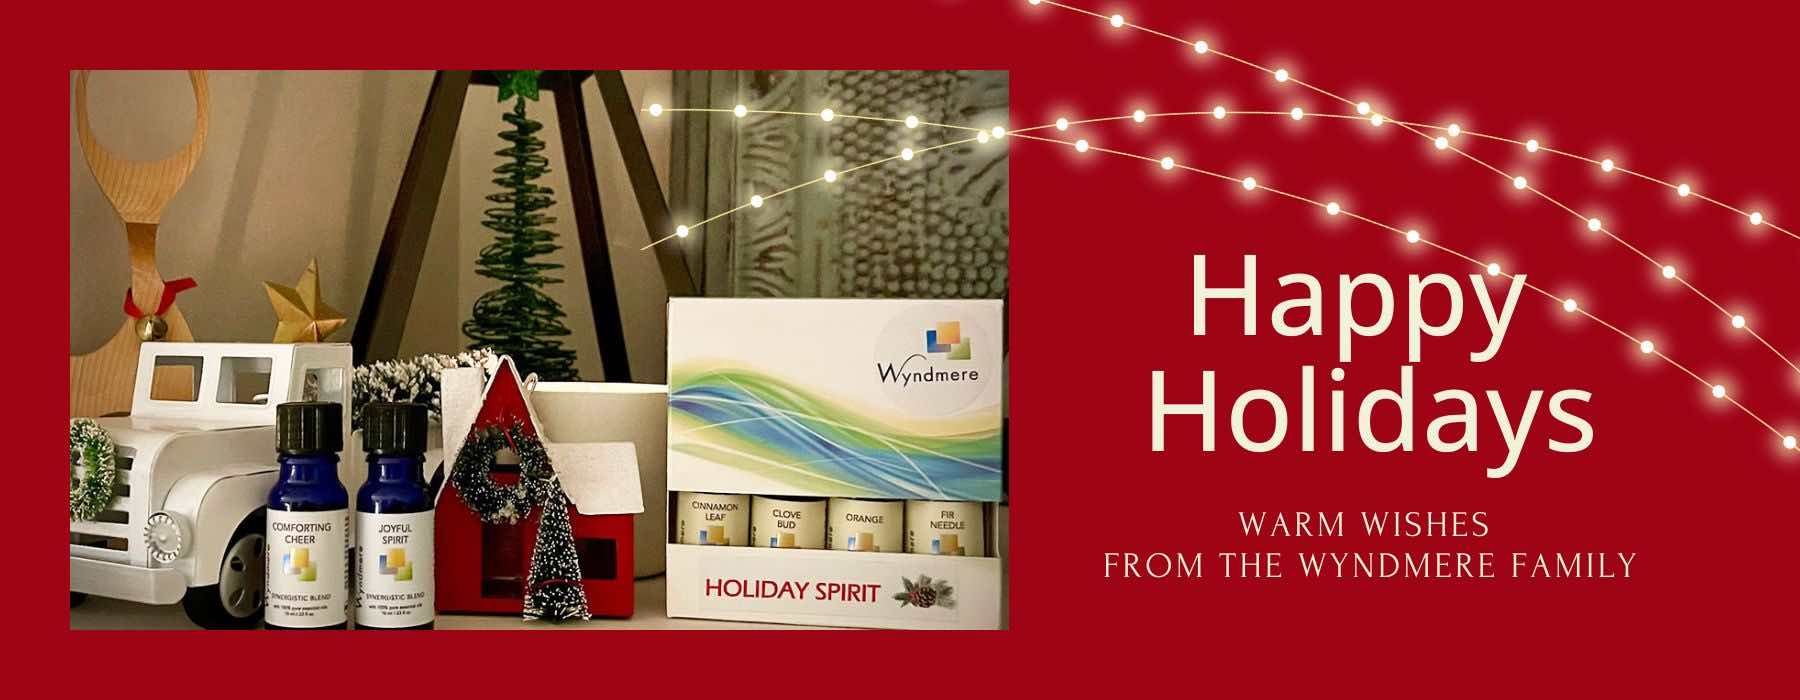 Wyndmere - Happy Holidays & Warm Wishes From The Wyndmere Family